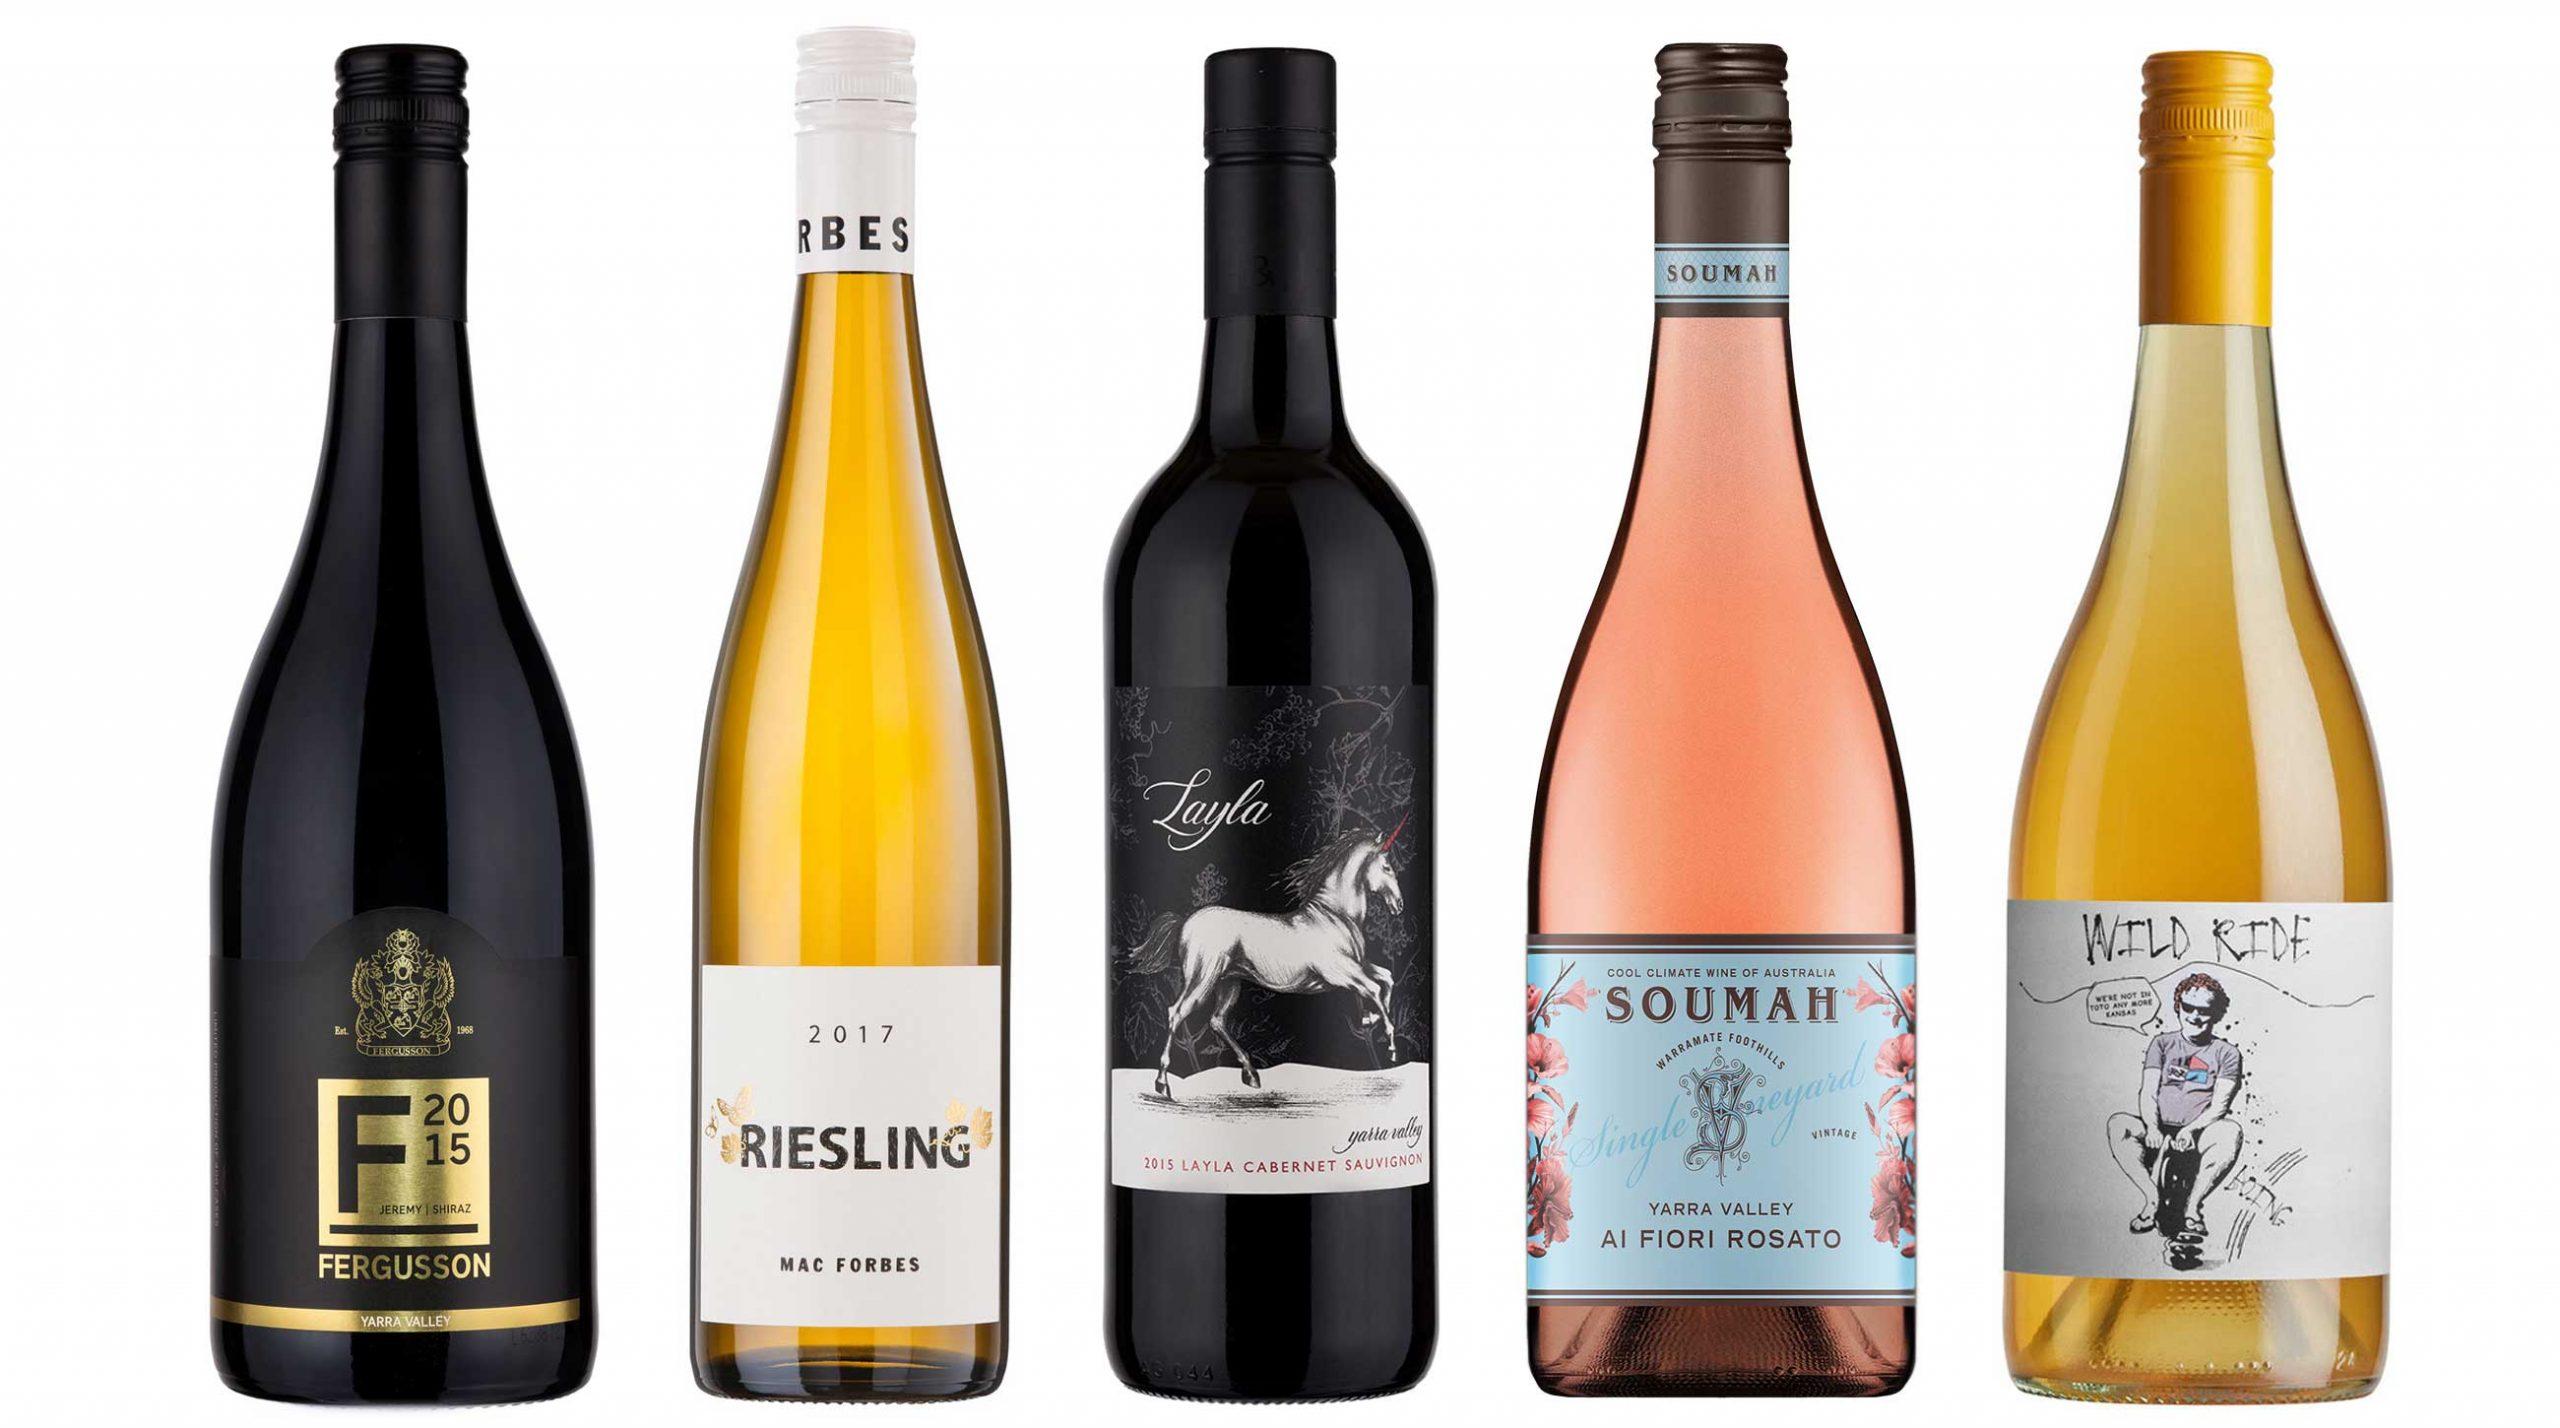 5 different wine bottle label designs by Sonsie Studios.